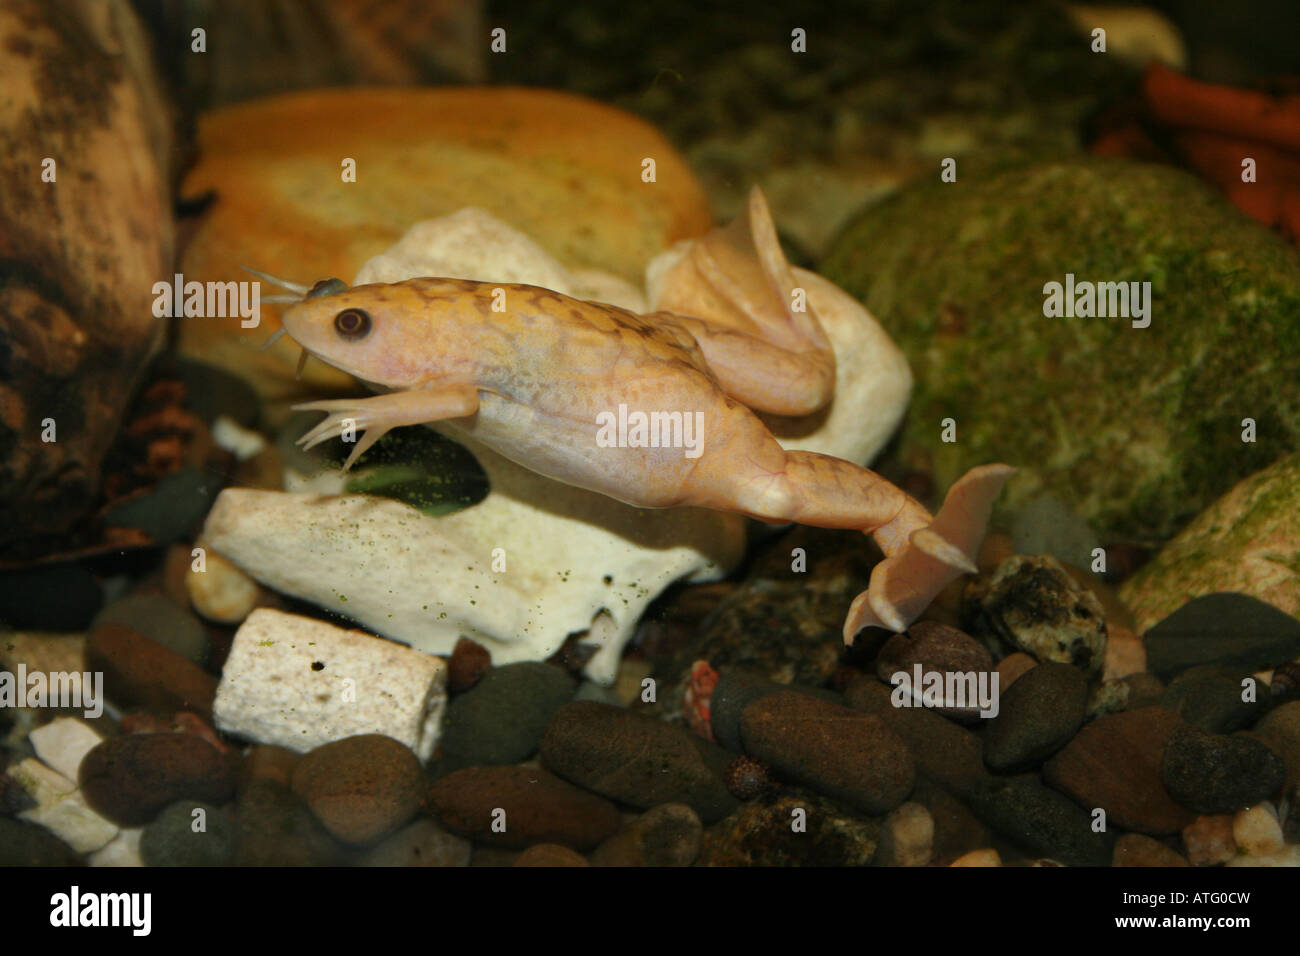 Лягушки в соленой воде. Шпорцевая лягушка Xenopus laevis. Гименохирус лягушка альбинос. Шпорцевая лягушка альбинос. Лягушка белая аквариумная шпорцевая.